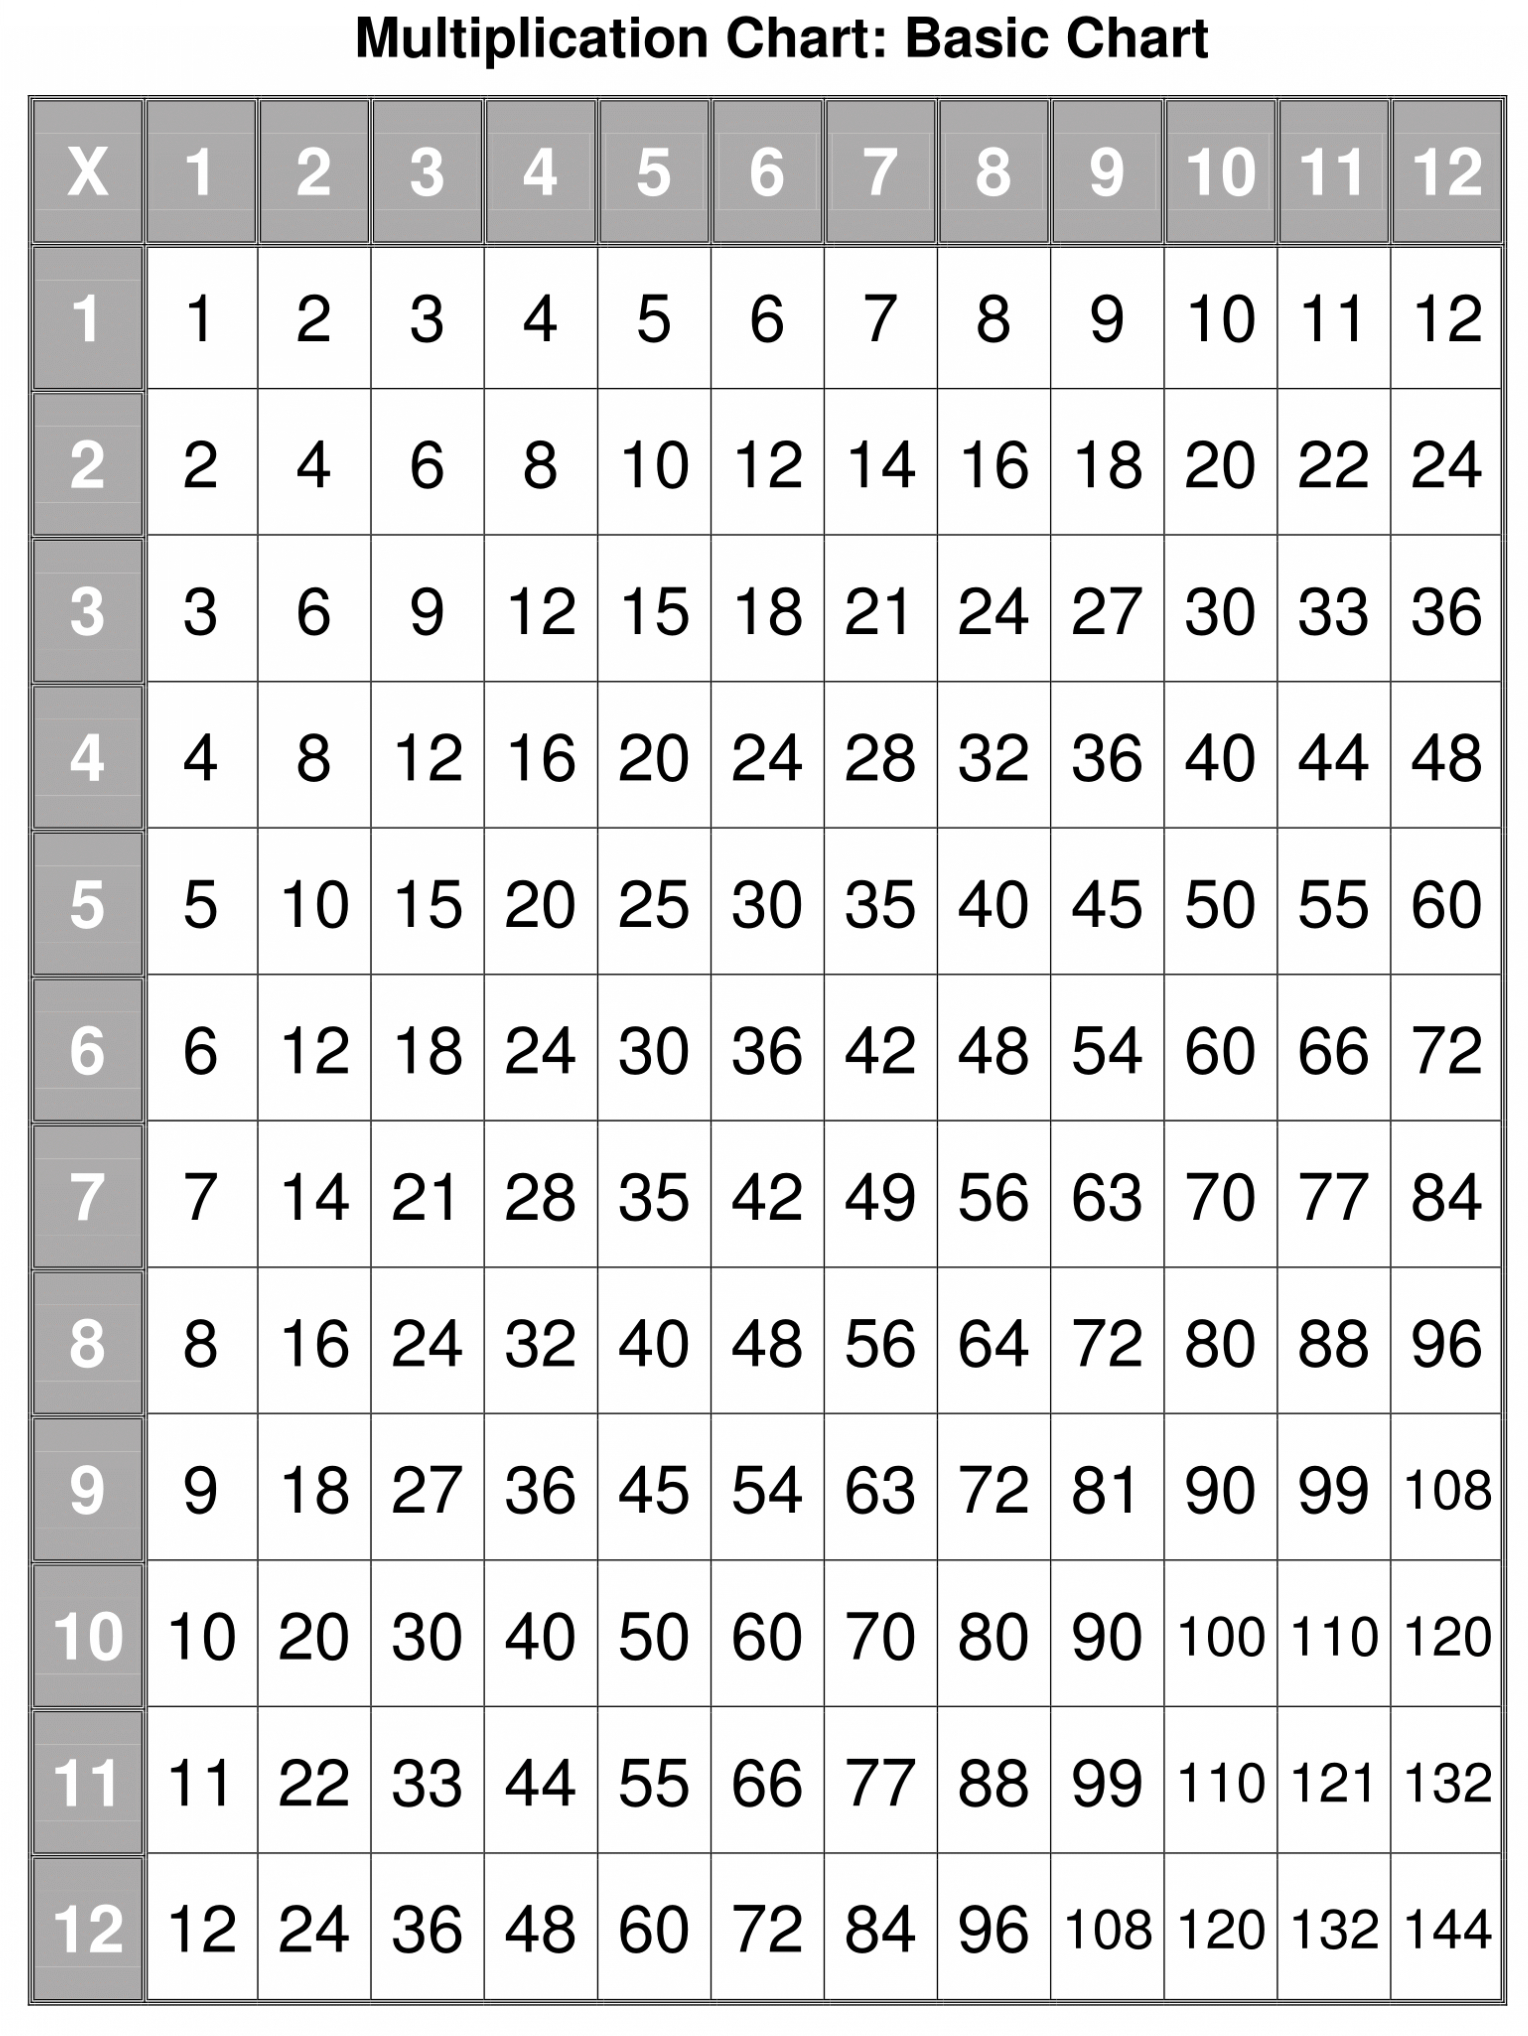 multiplication table worksheet pdf